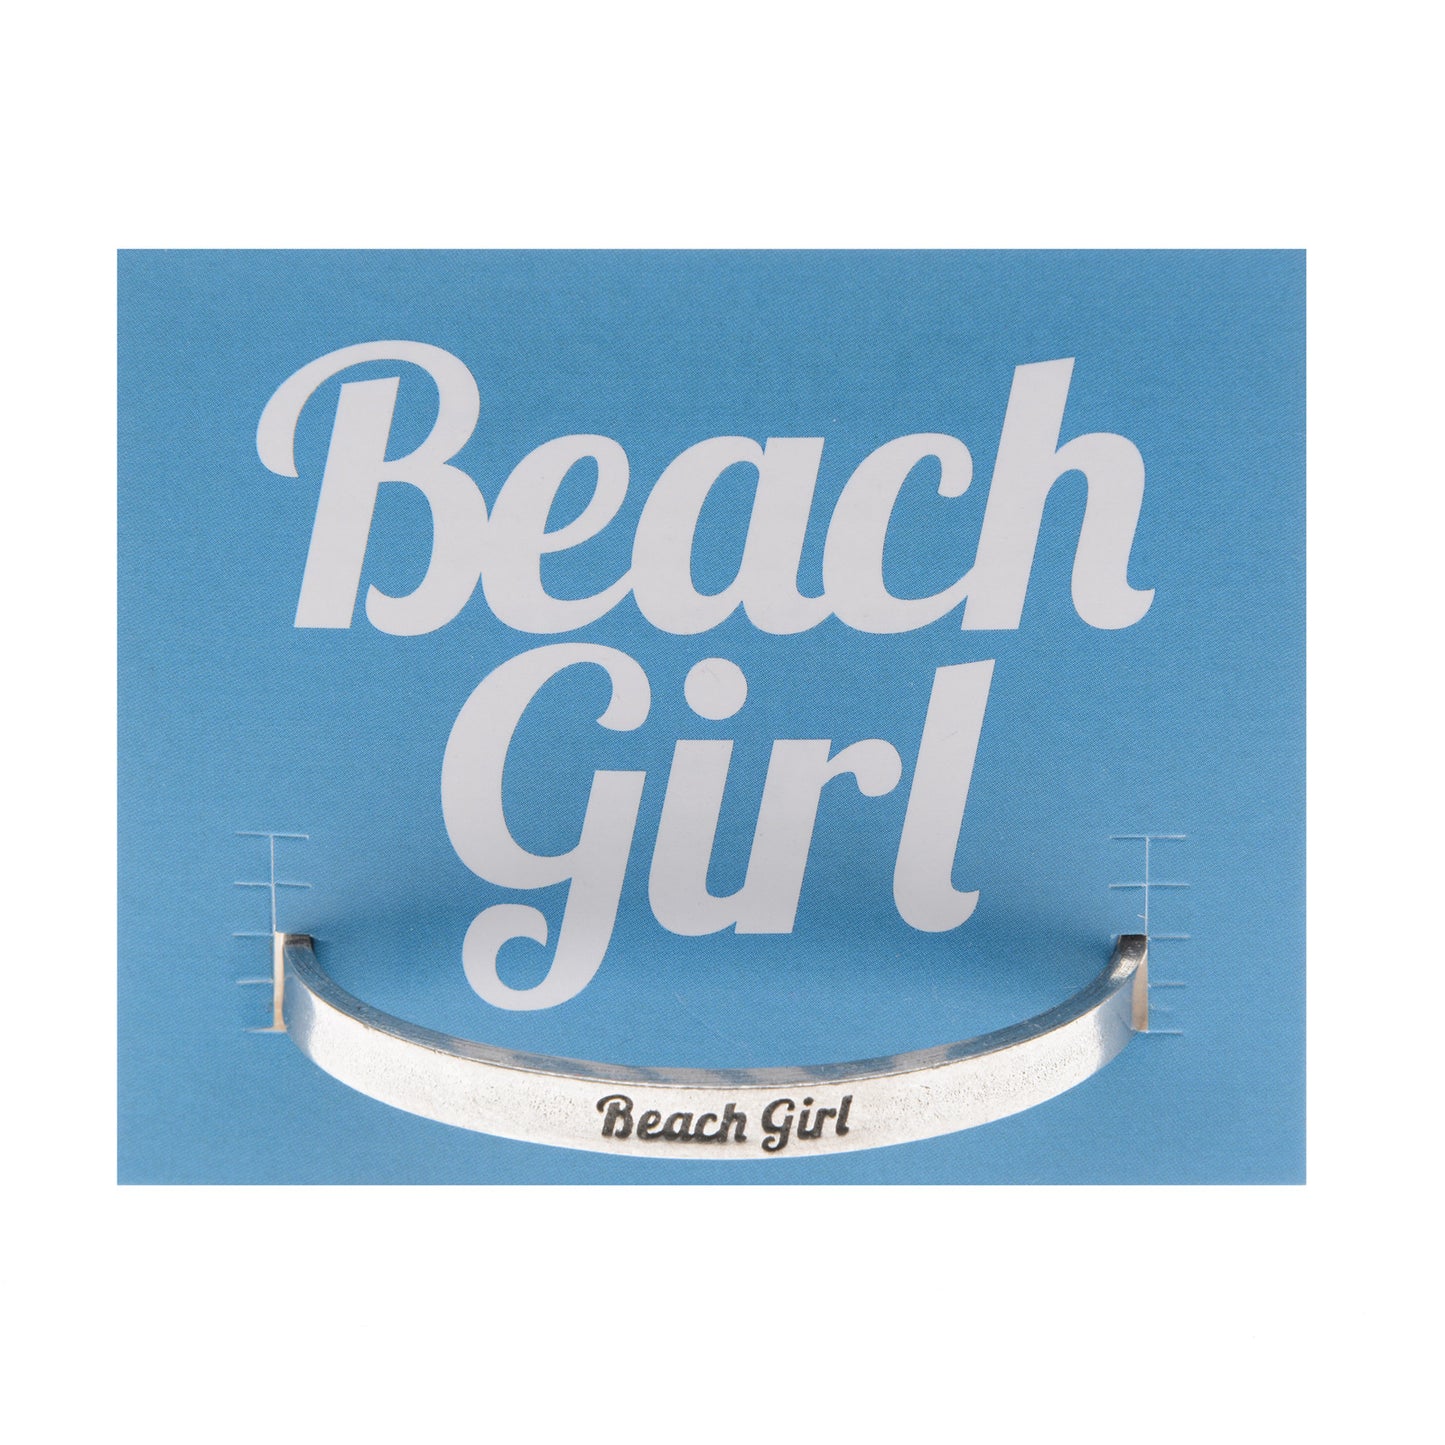 Beach Girl Quotable Cuff Bracelet on backer card